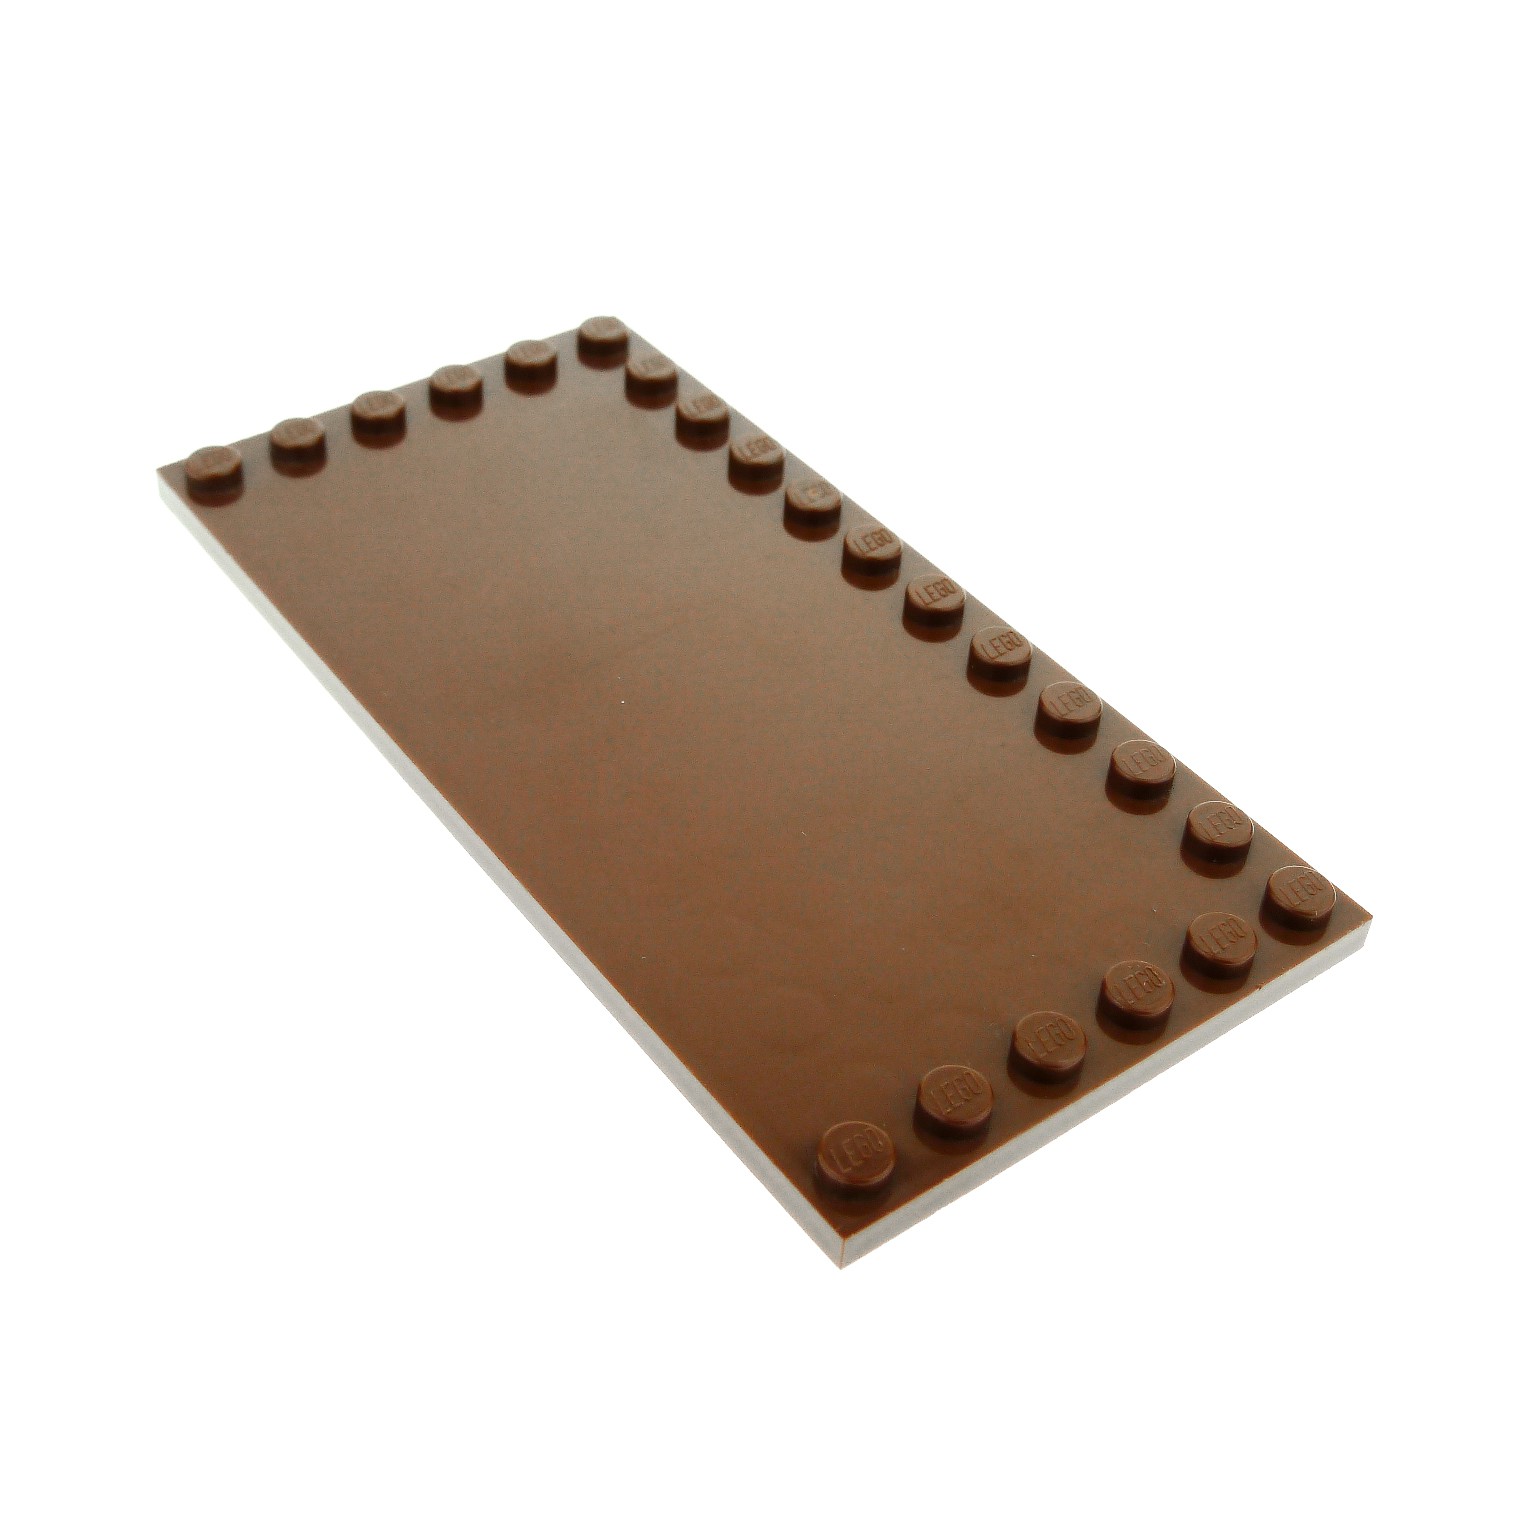 rotbraun 1x2x1-85984 reddish brown Lego ® 10x Dachstein / Fliese 